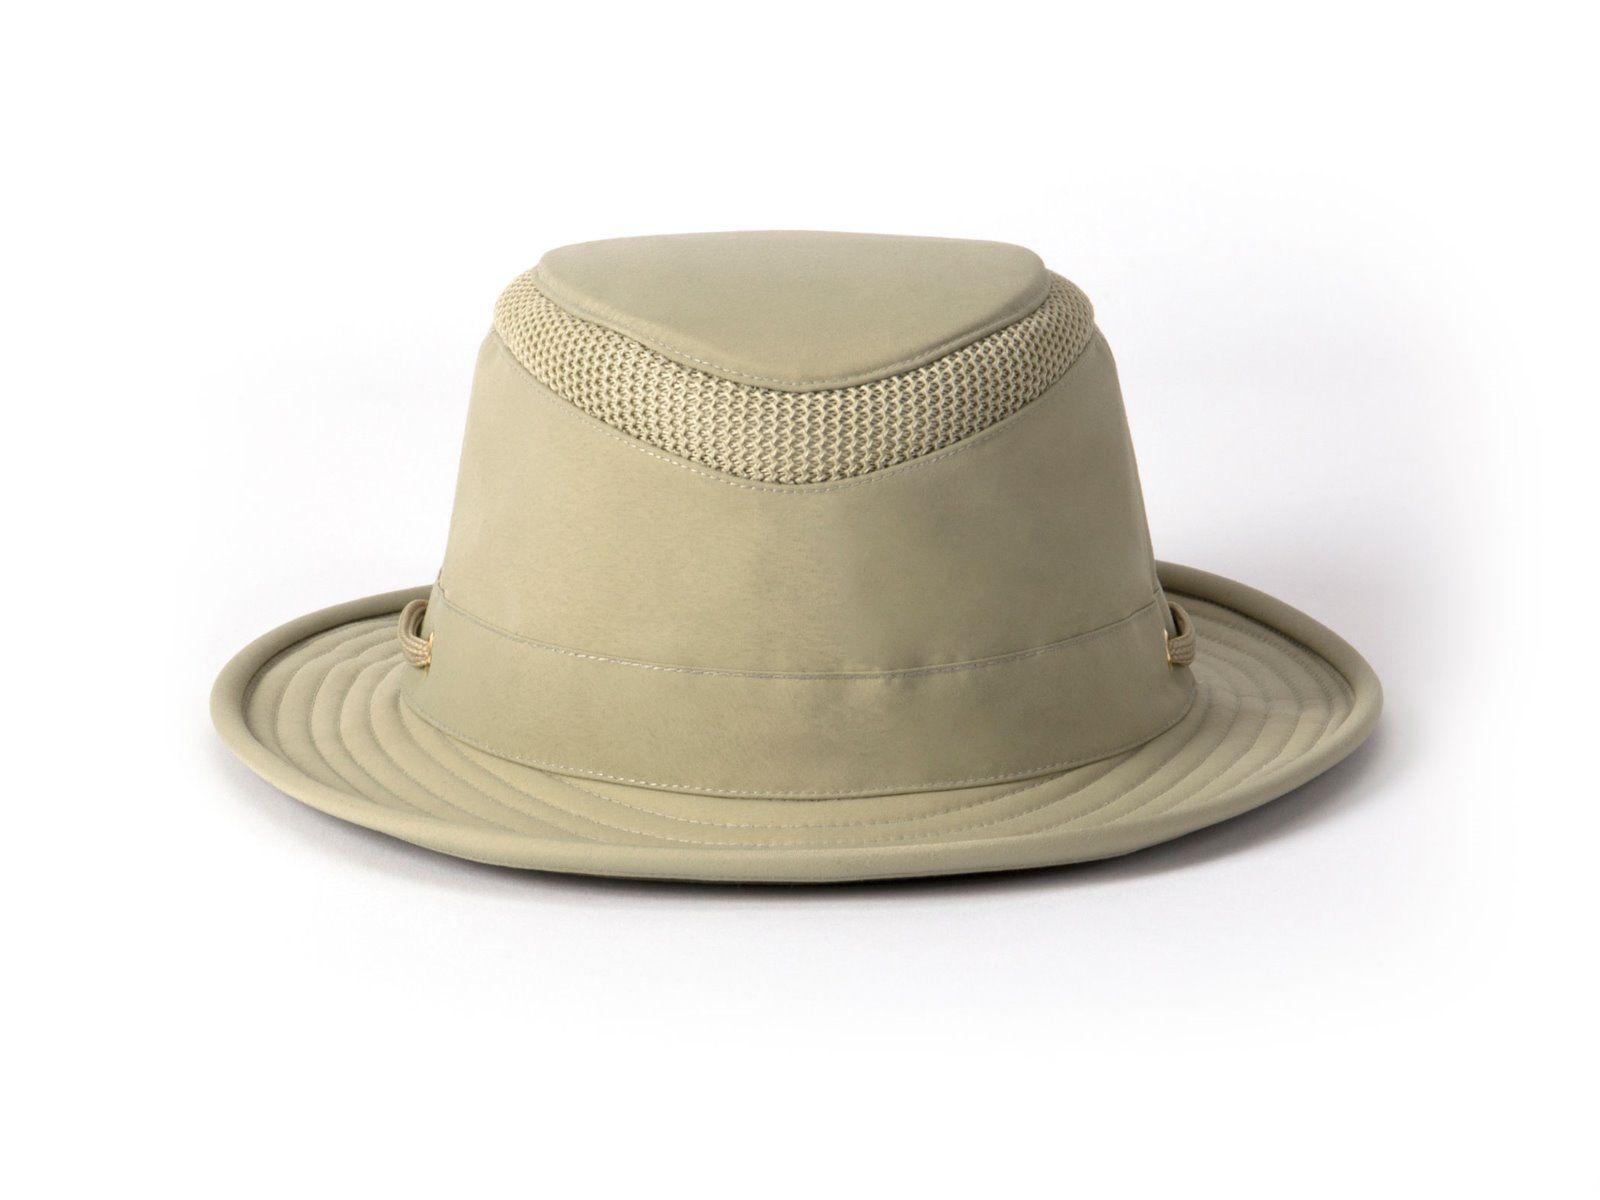 tilley-hats-tilley-ltm-5-mesh-vented-hat-khaki-0.jpg